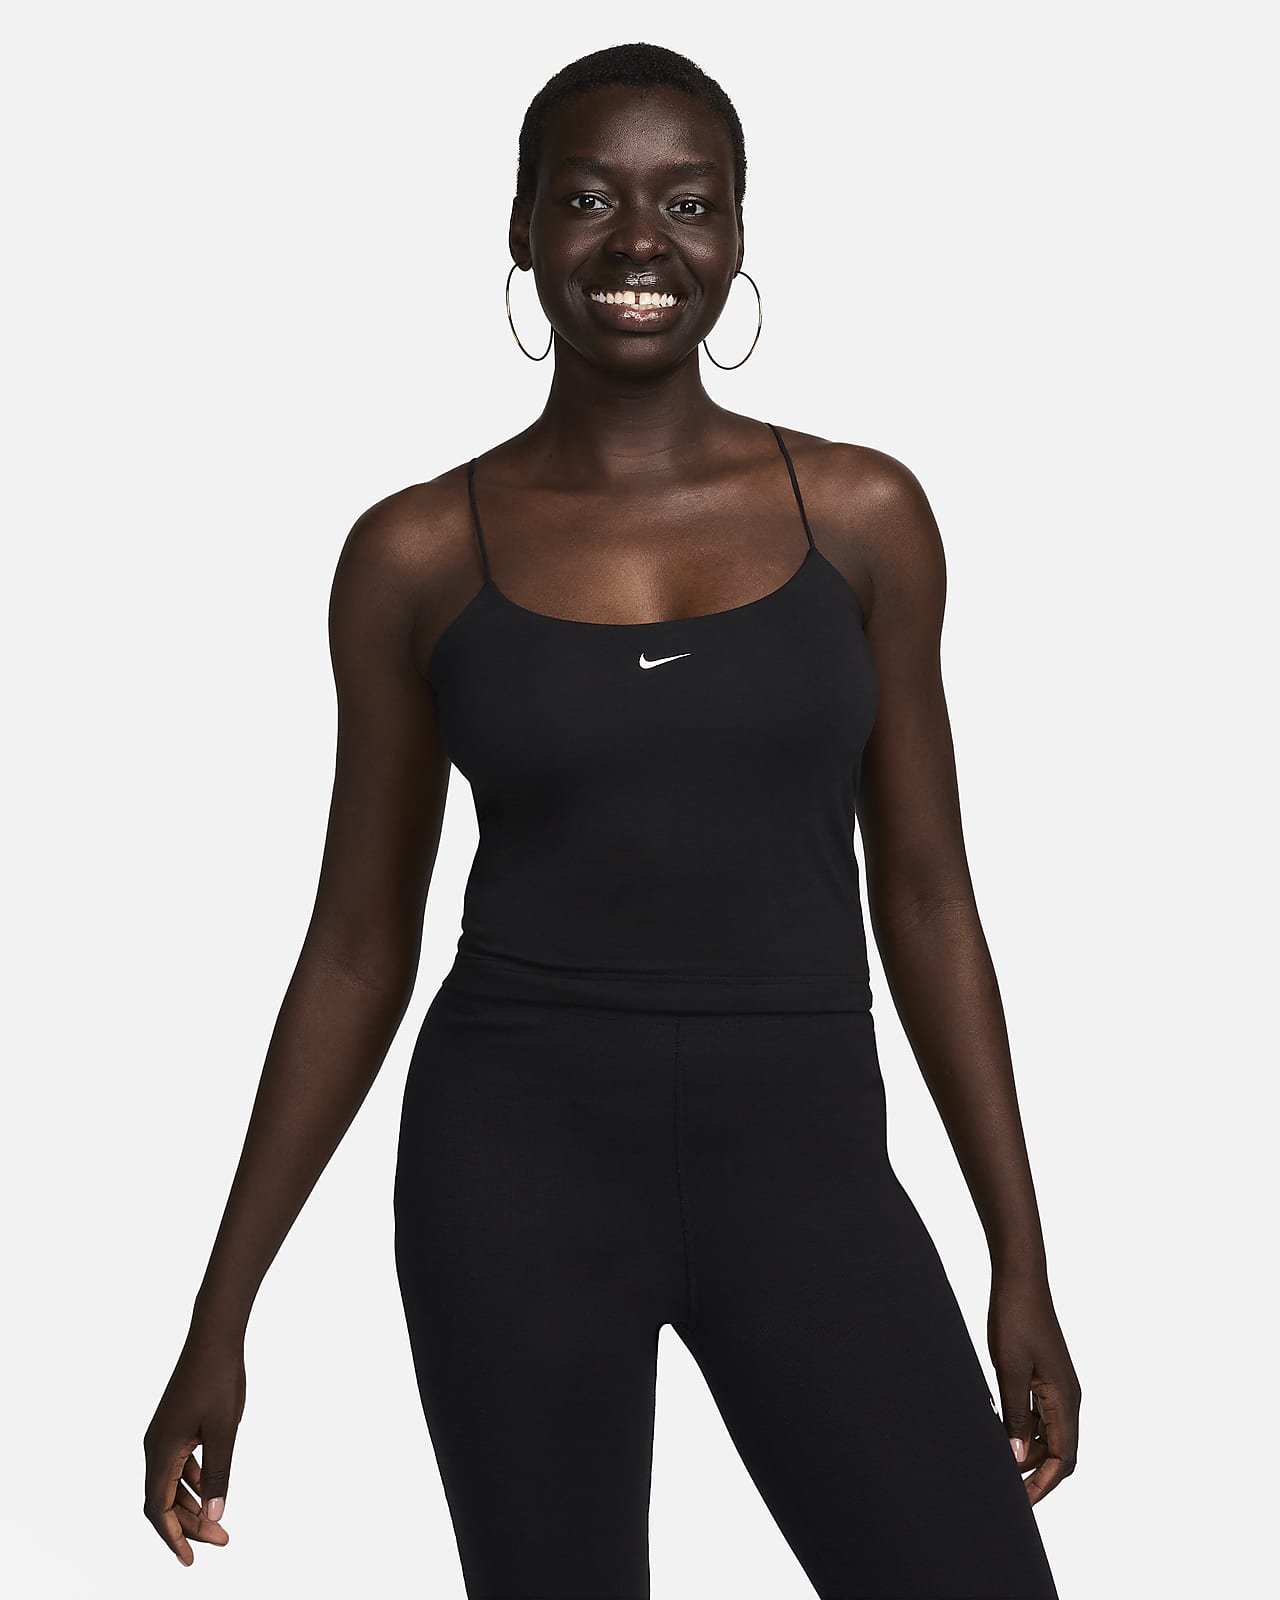 Camiseta de tirantes cami ajustada para mujer Nike Sportswear Chill Knit